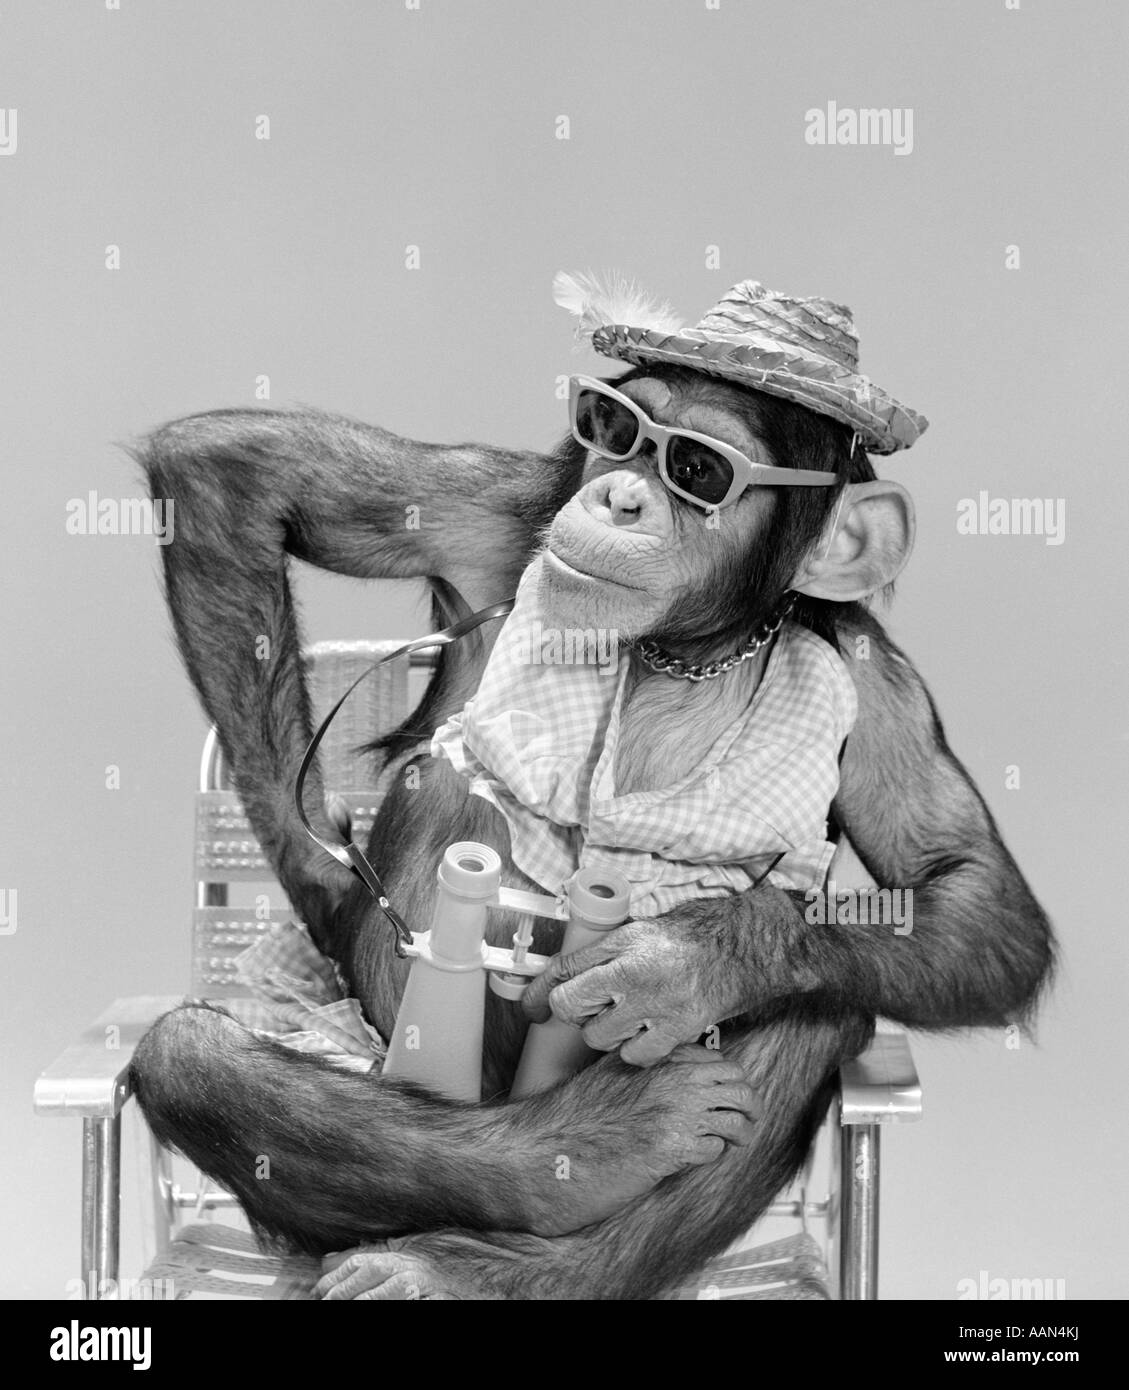 Monkey sunglasses hi-res stock photography - Alamy